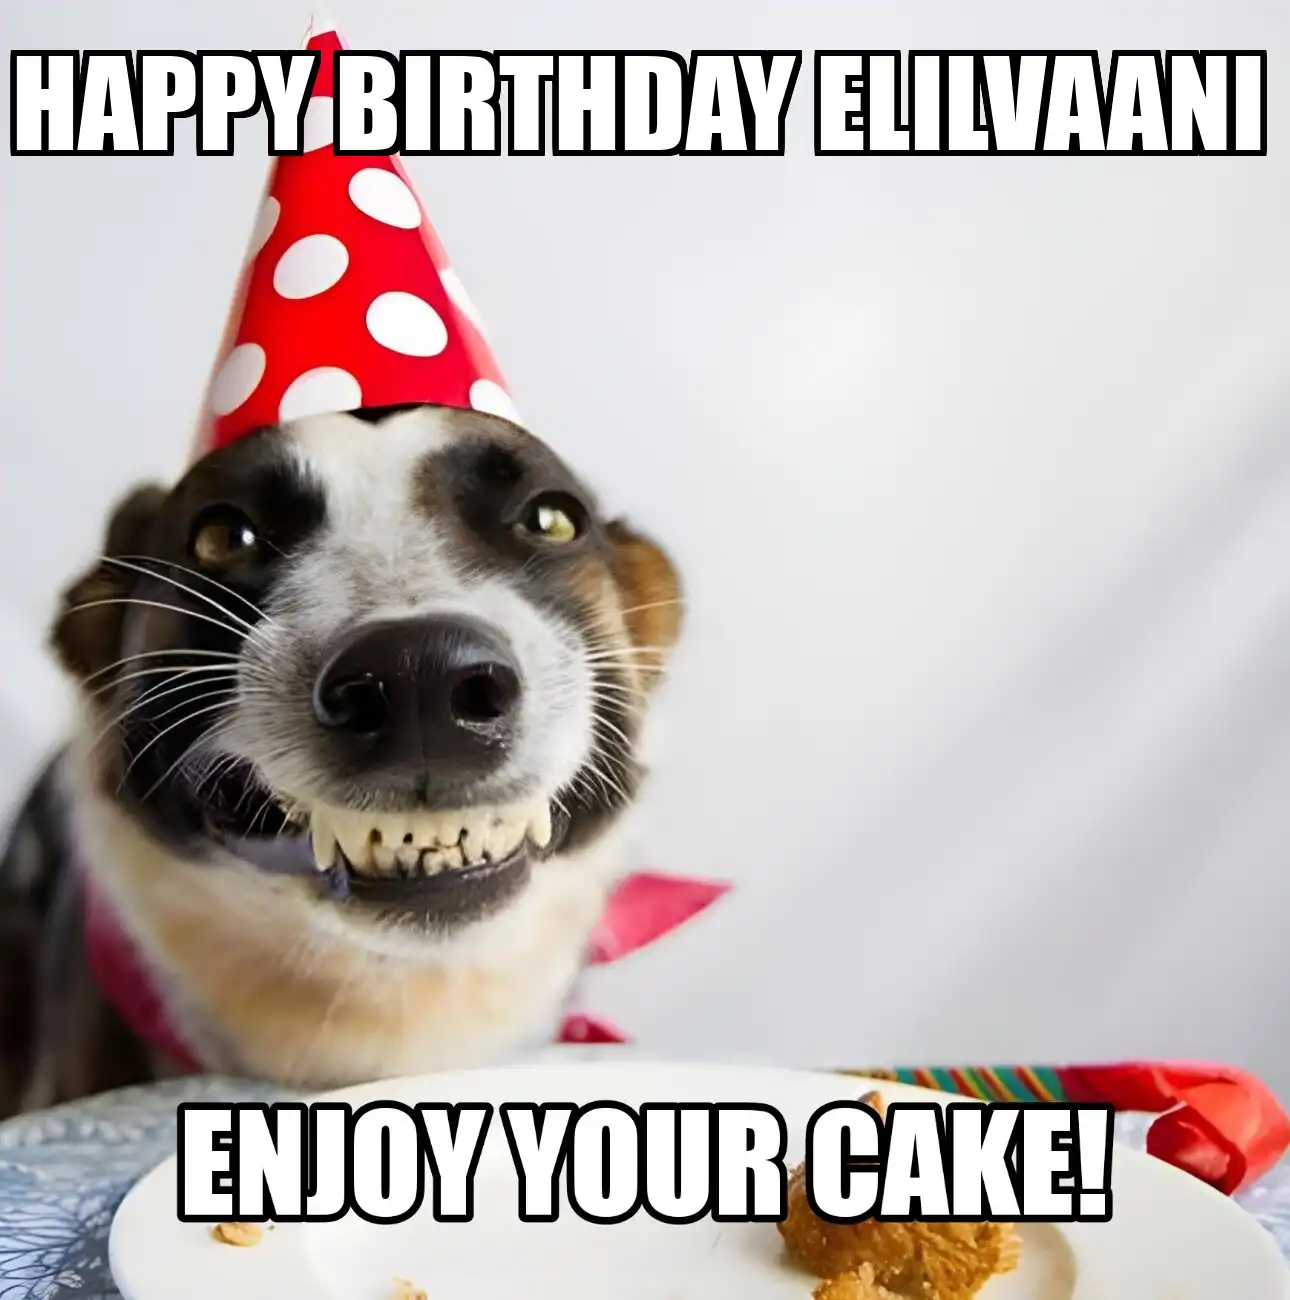 Happy Birthday Elilvaani Enjoy Your Cake Dog Meme